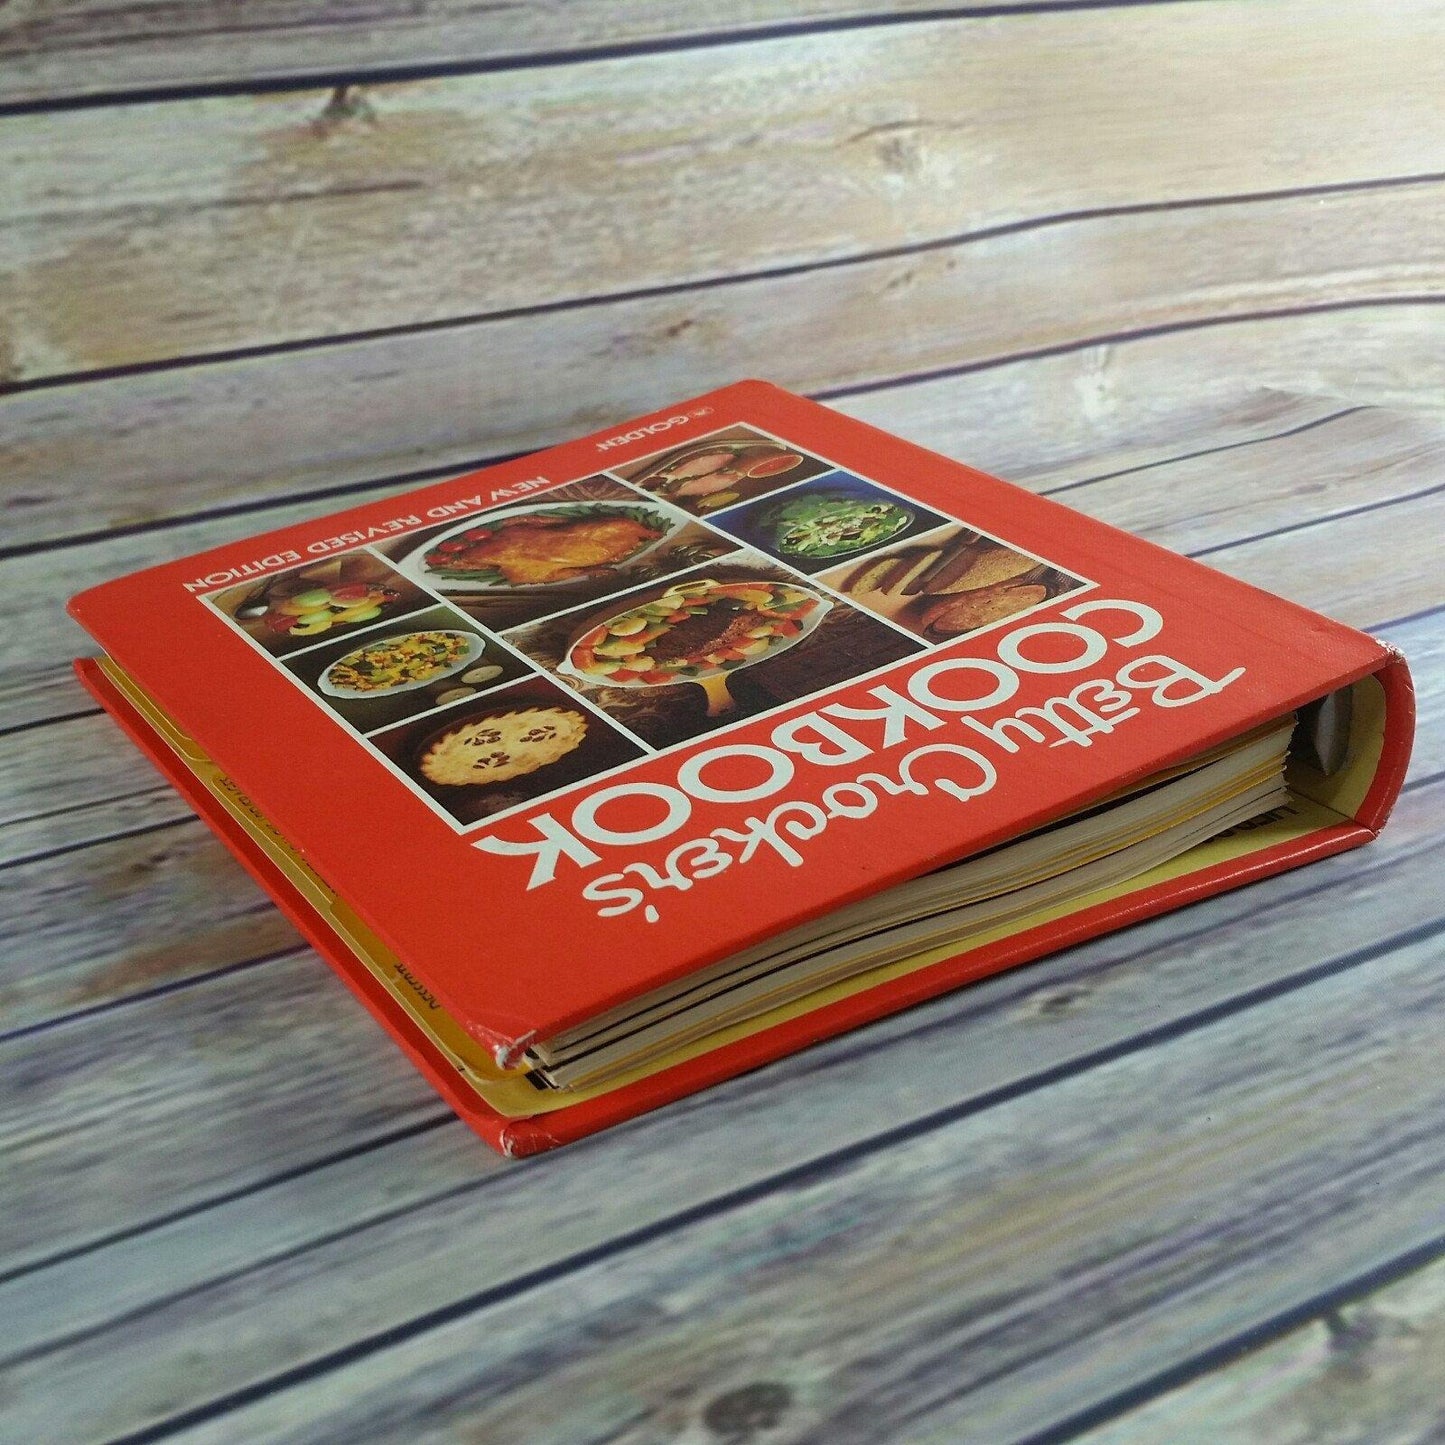 Vintage Cookbook Betty Crocker Recipes 1969 5 Ring Binder Cook Book Golden Press